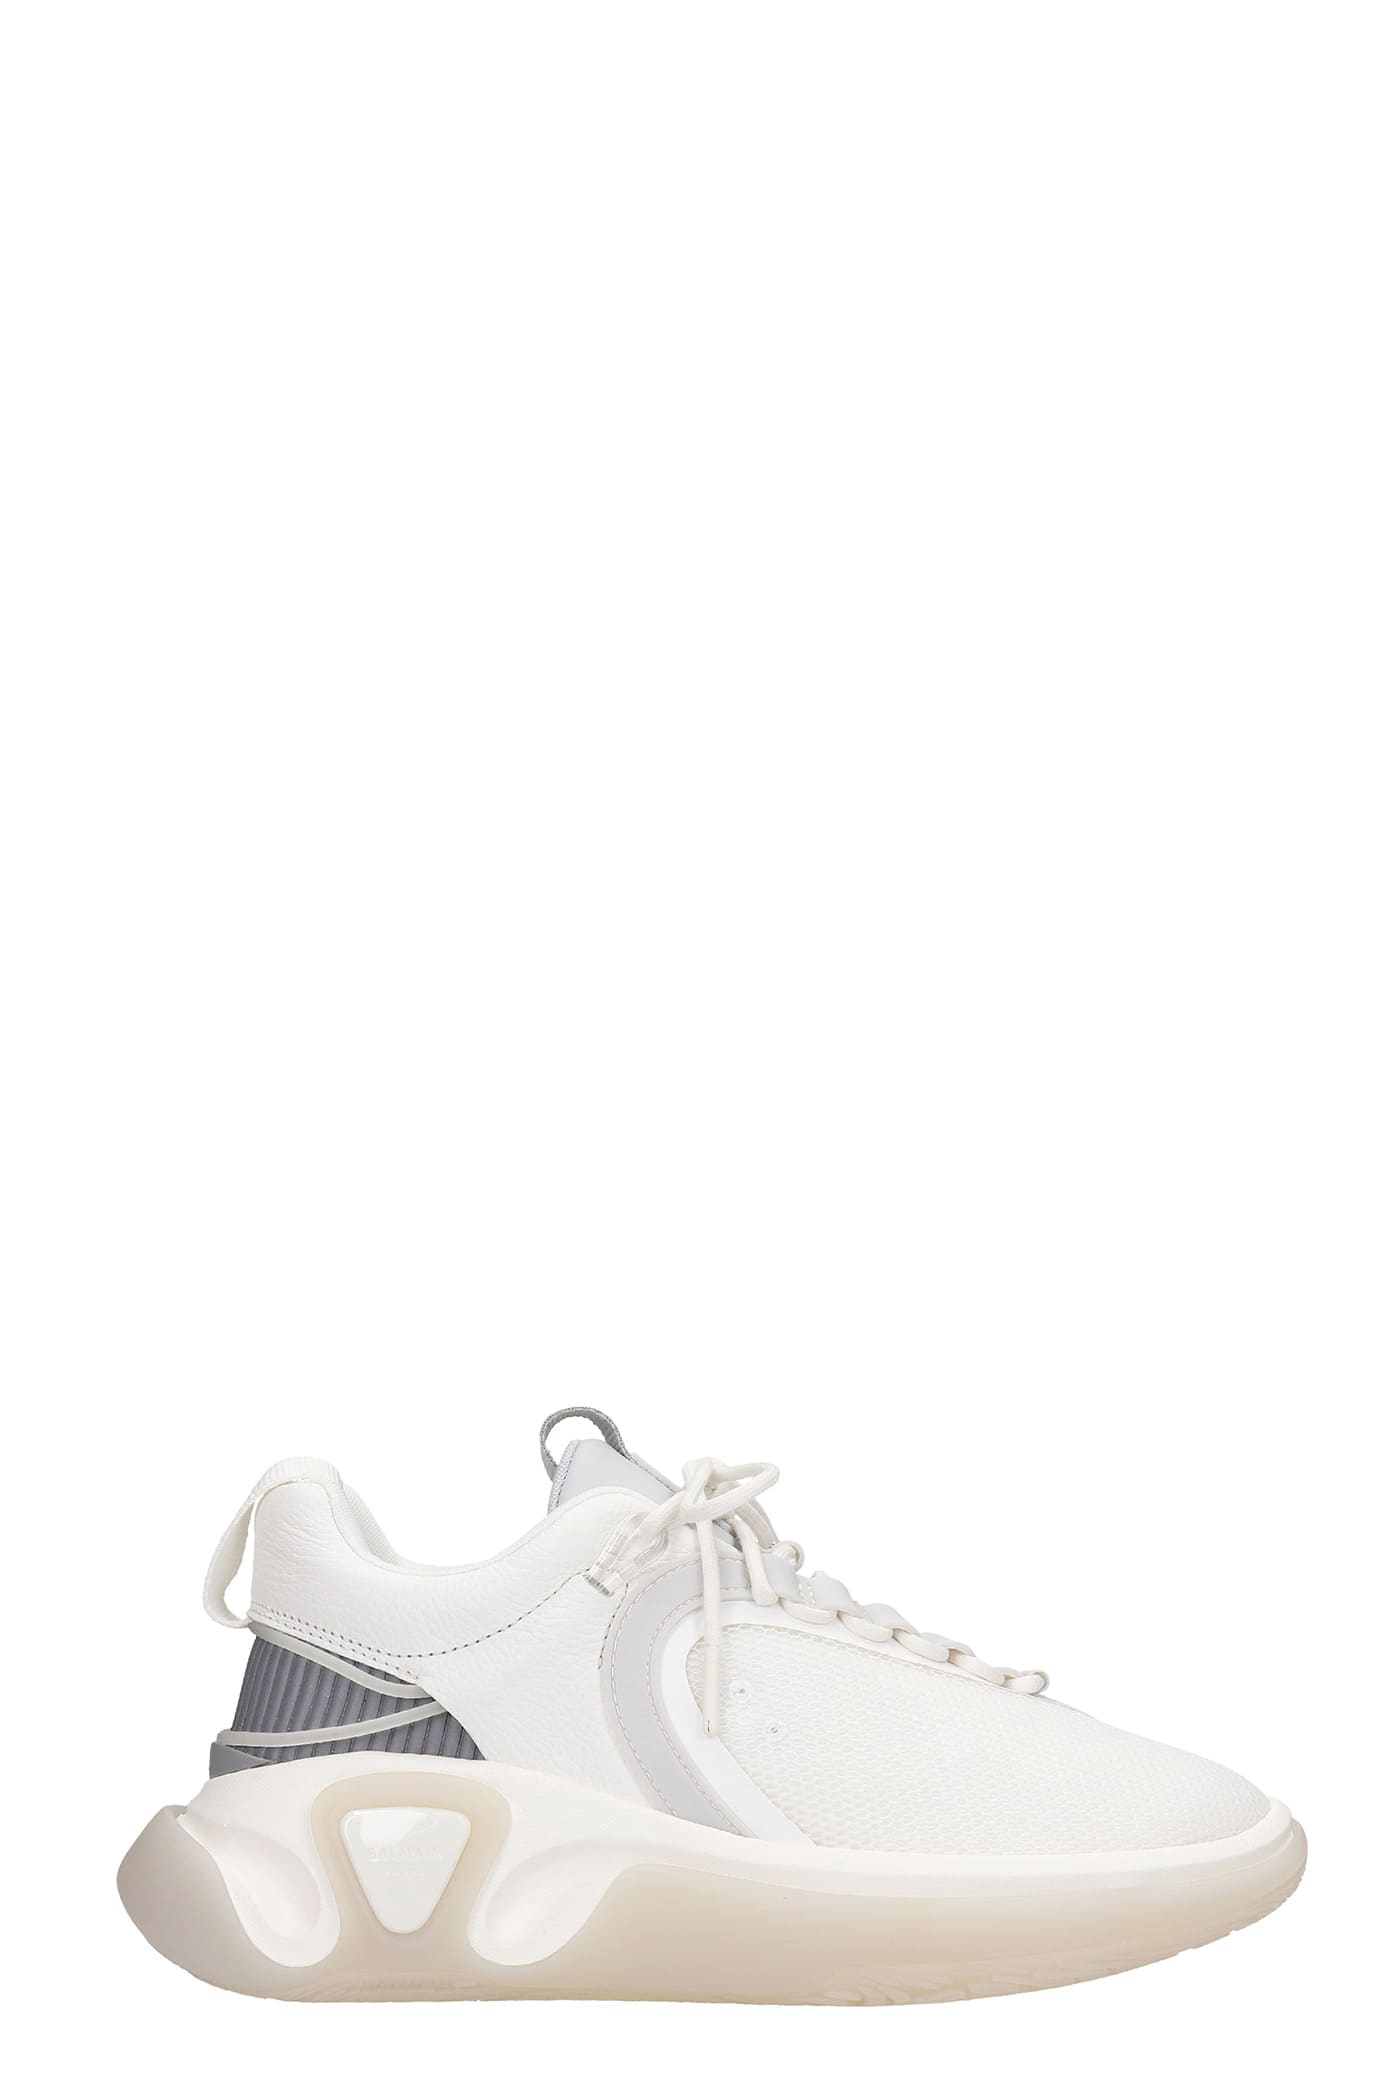 Balmain B-runner Sneakers In White Leather